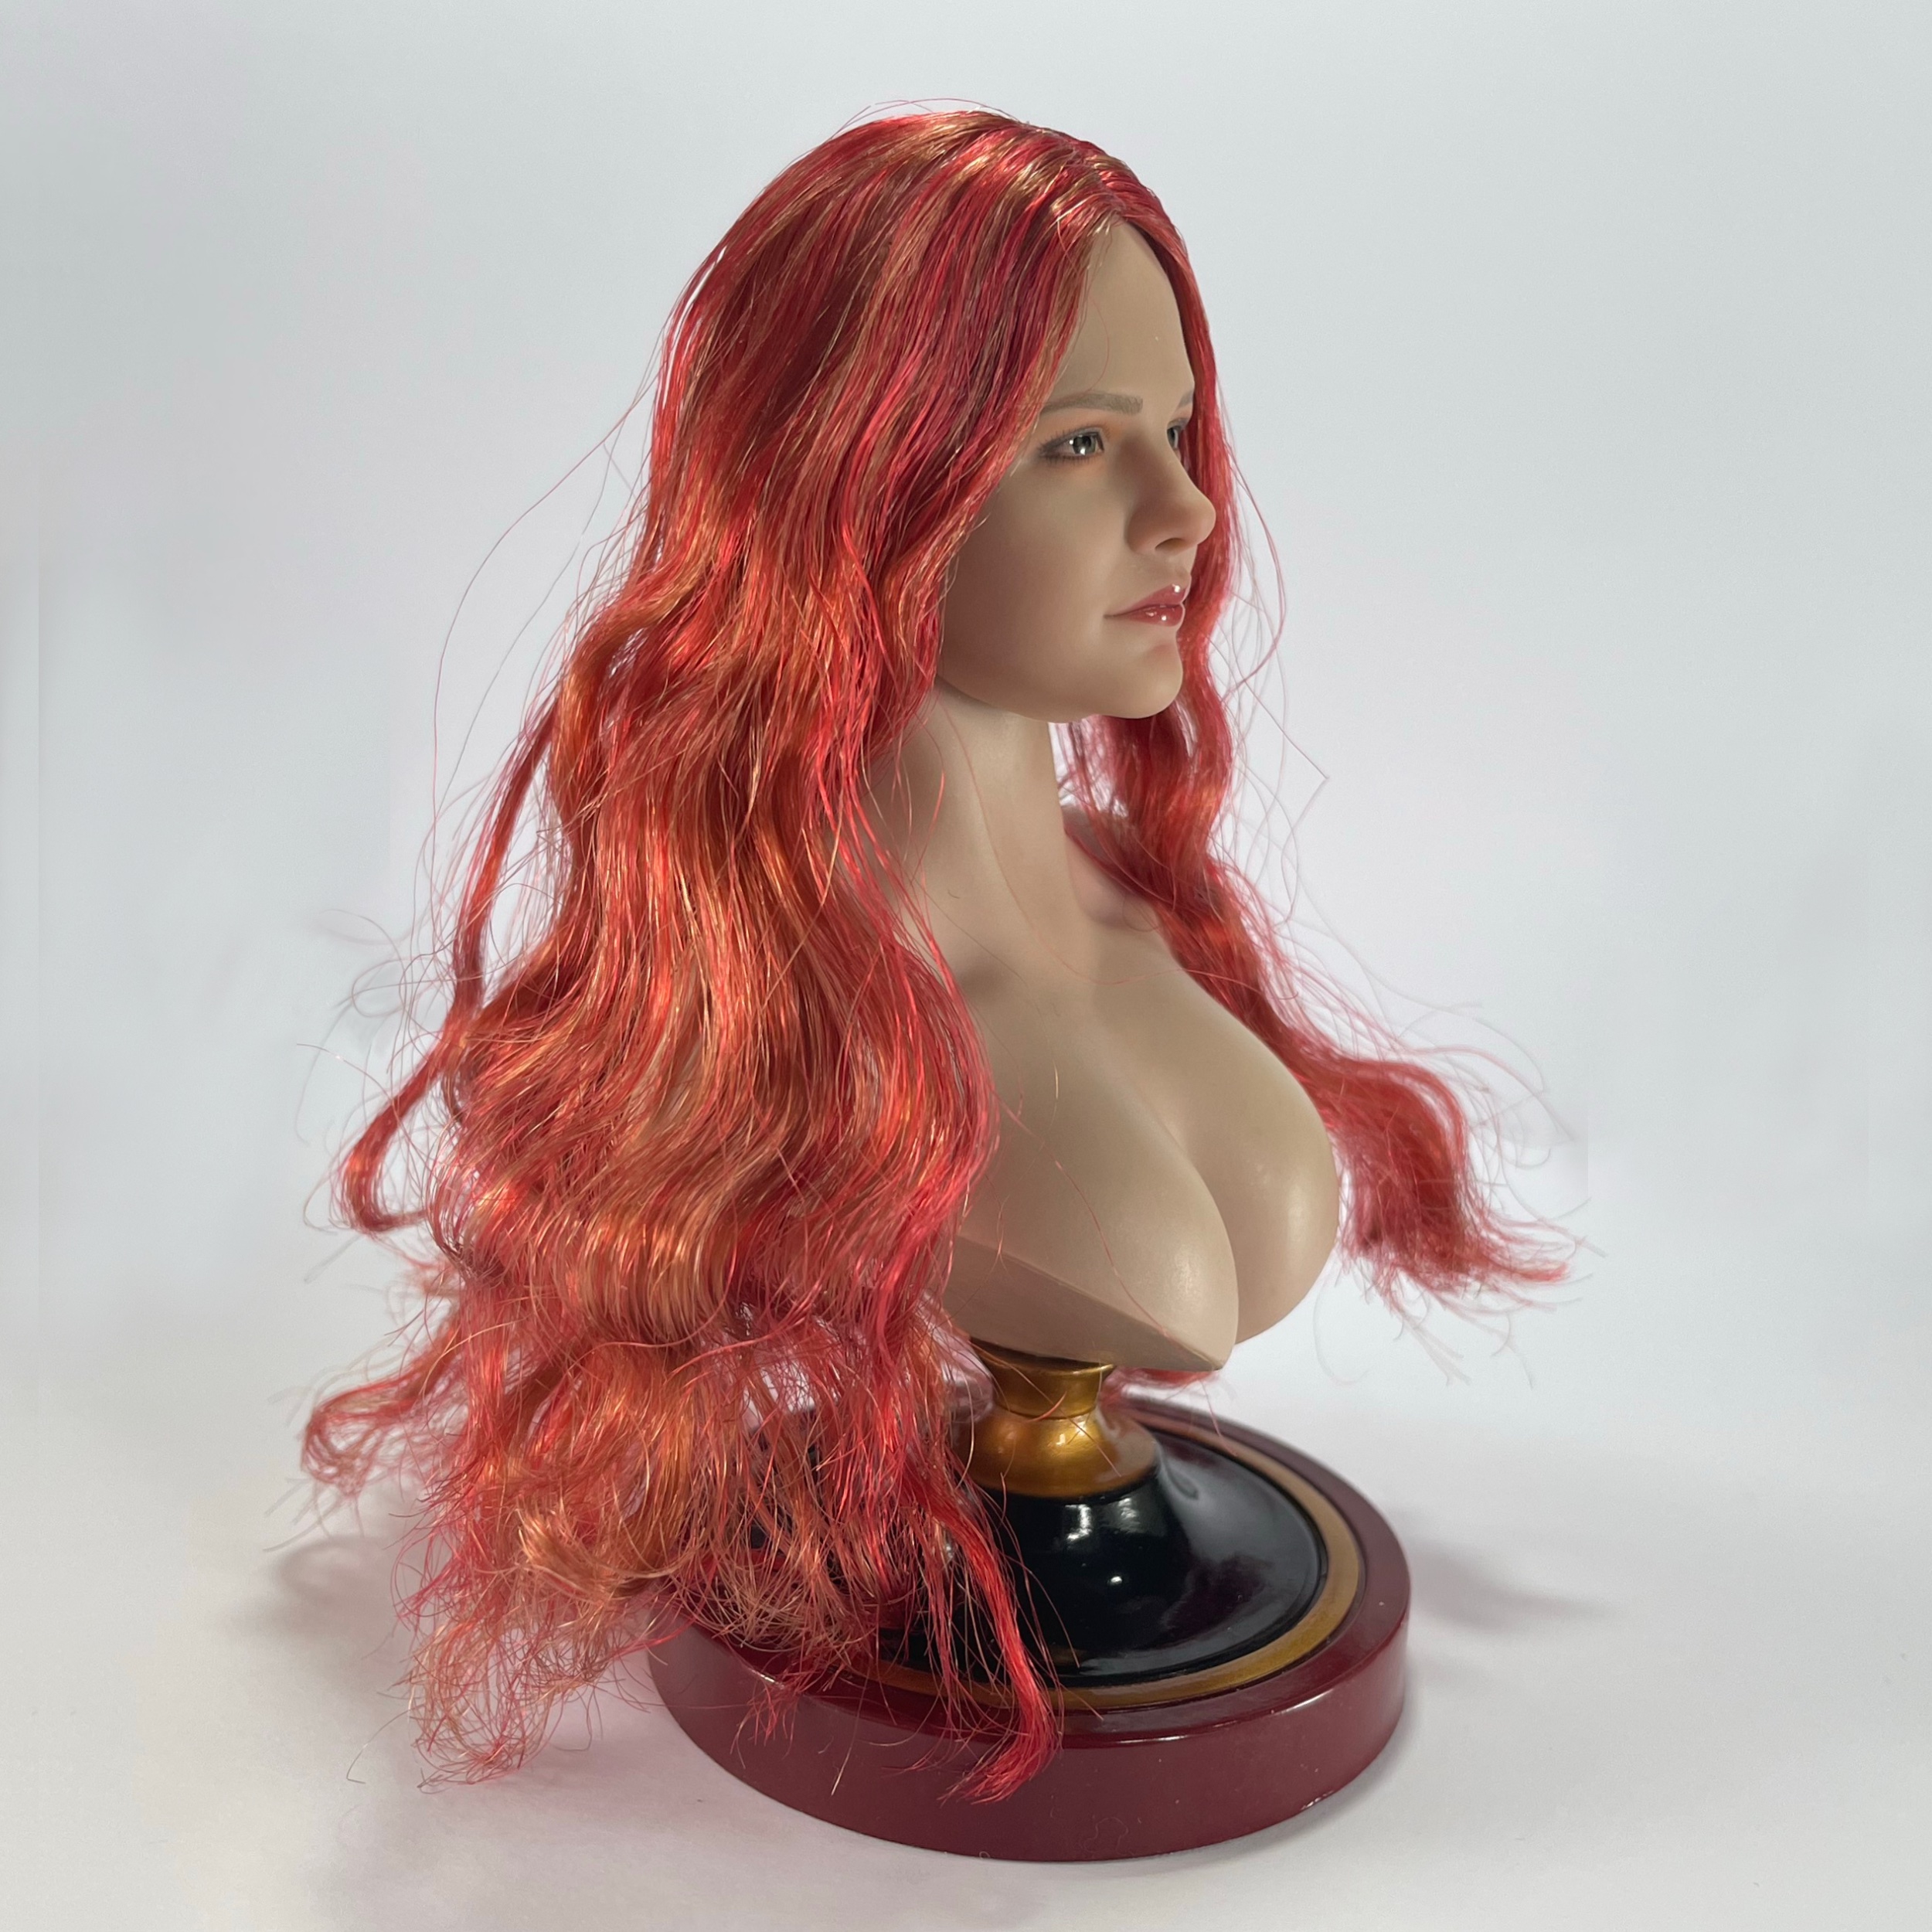 superduck - NEW PRODUCT: SUPER DUCK SDH036 1/6 Scale Female head sculpt in 4 styles 52860114403_56650c0e42_o